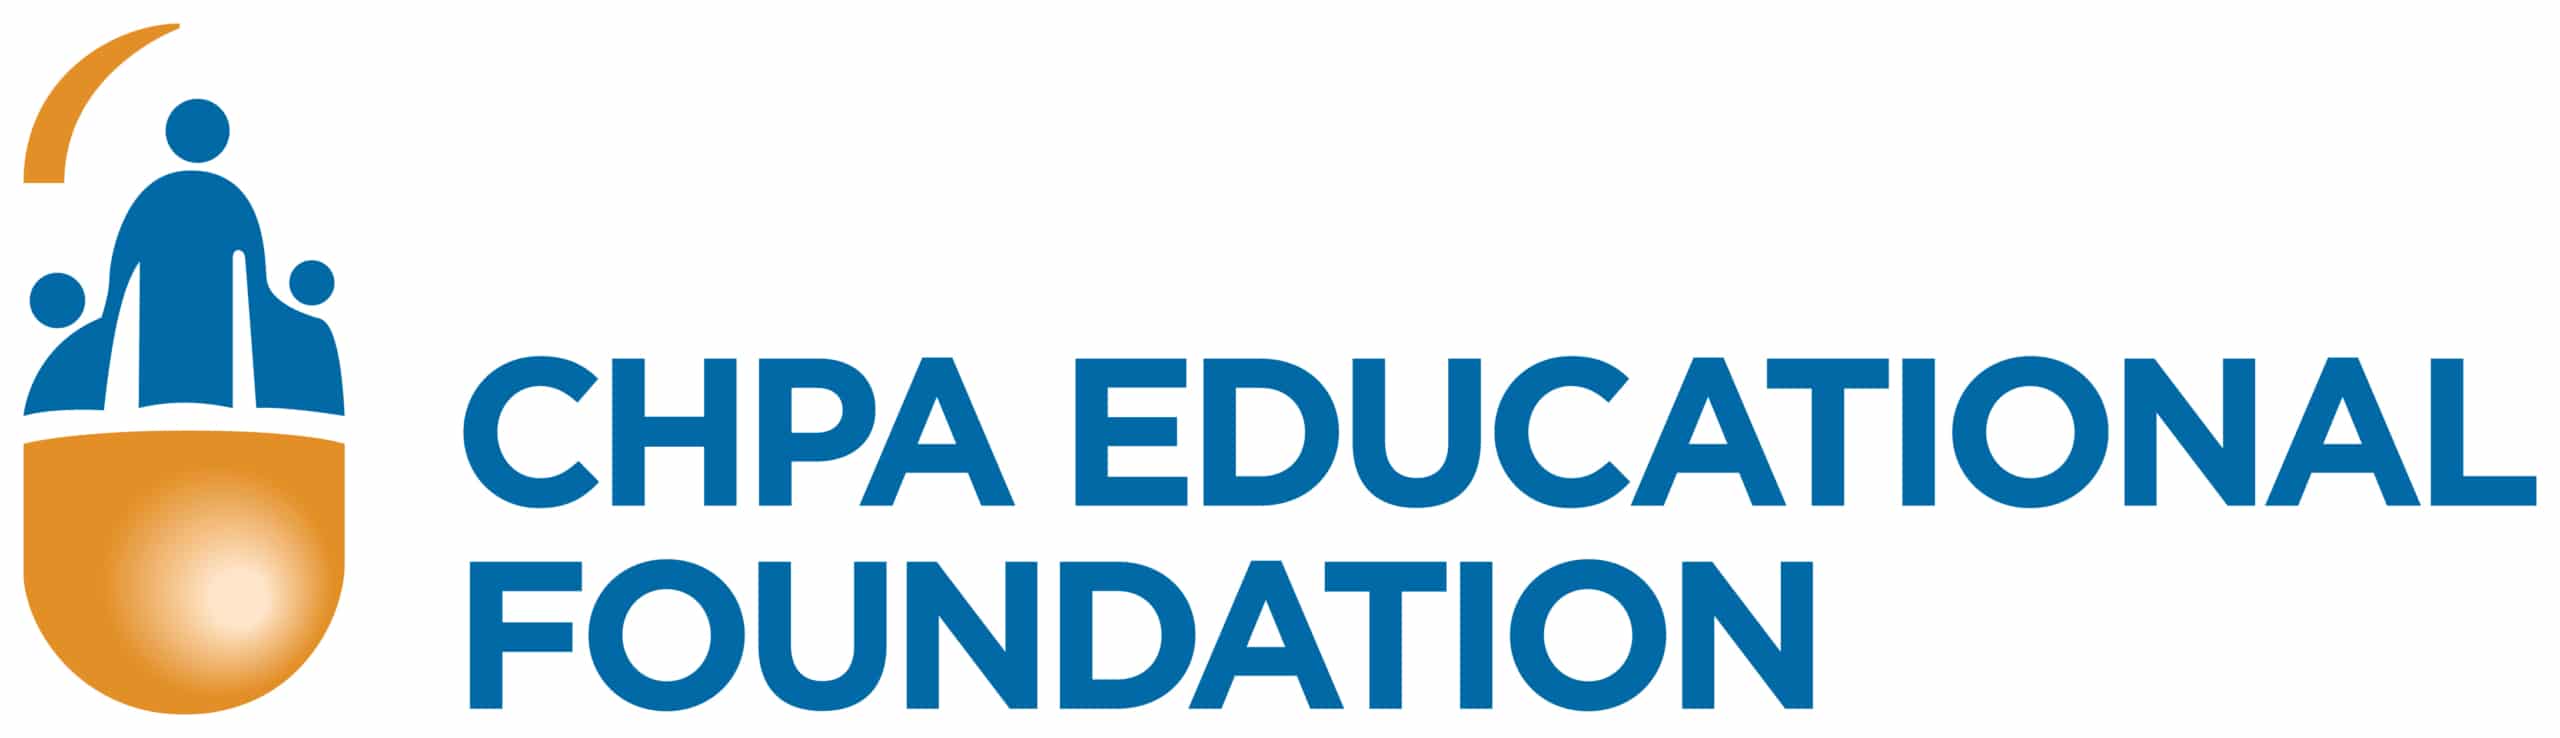 CHPA Educational Foundation logo.